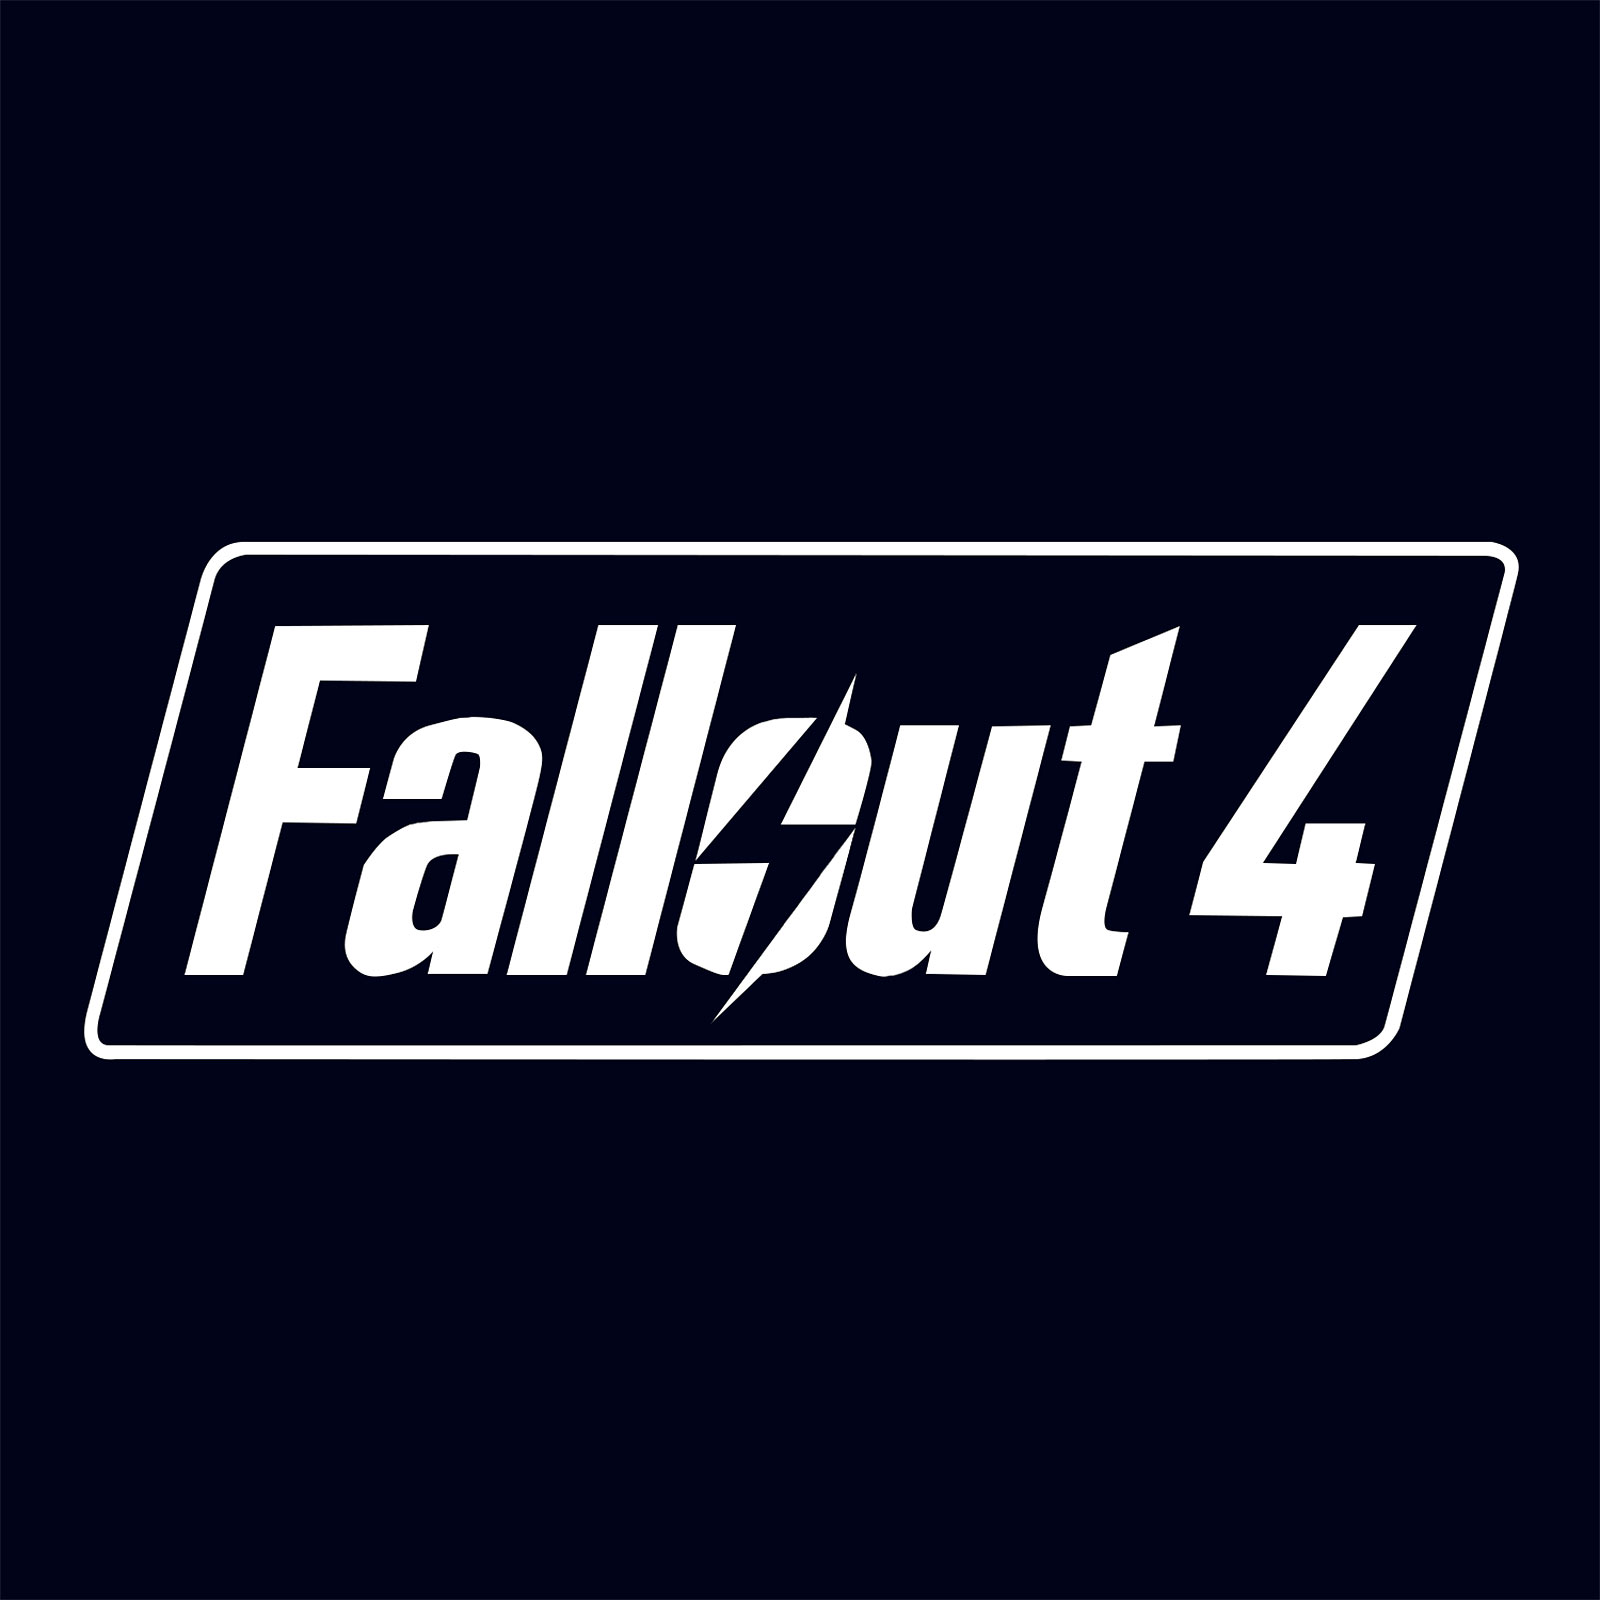 Fallout 4 - Game Logo T-Shirt schwarz